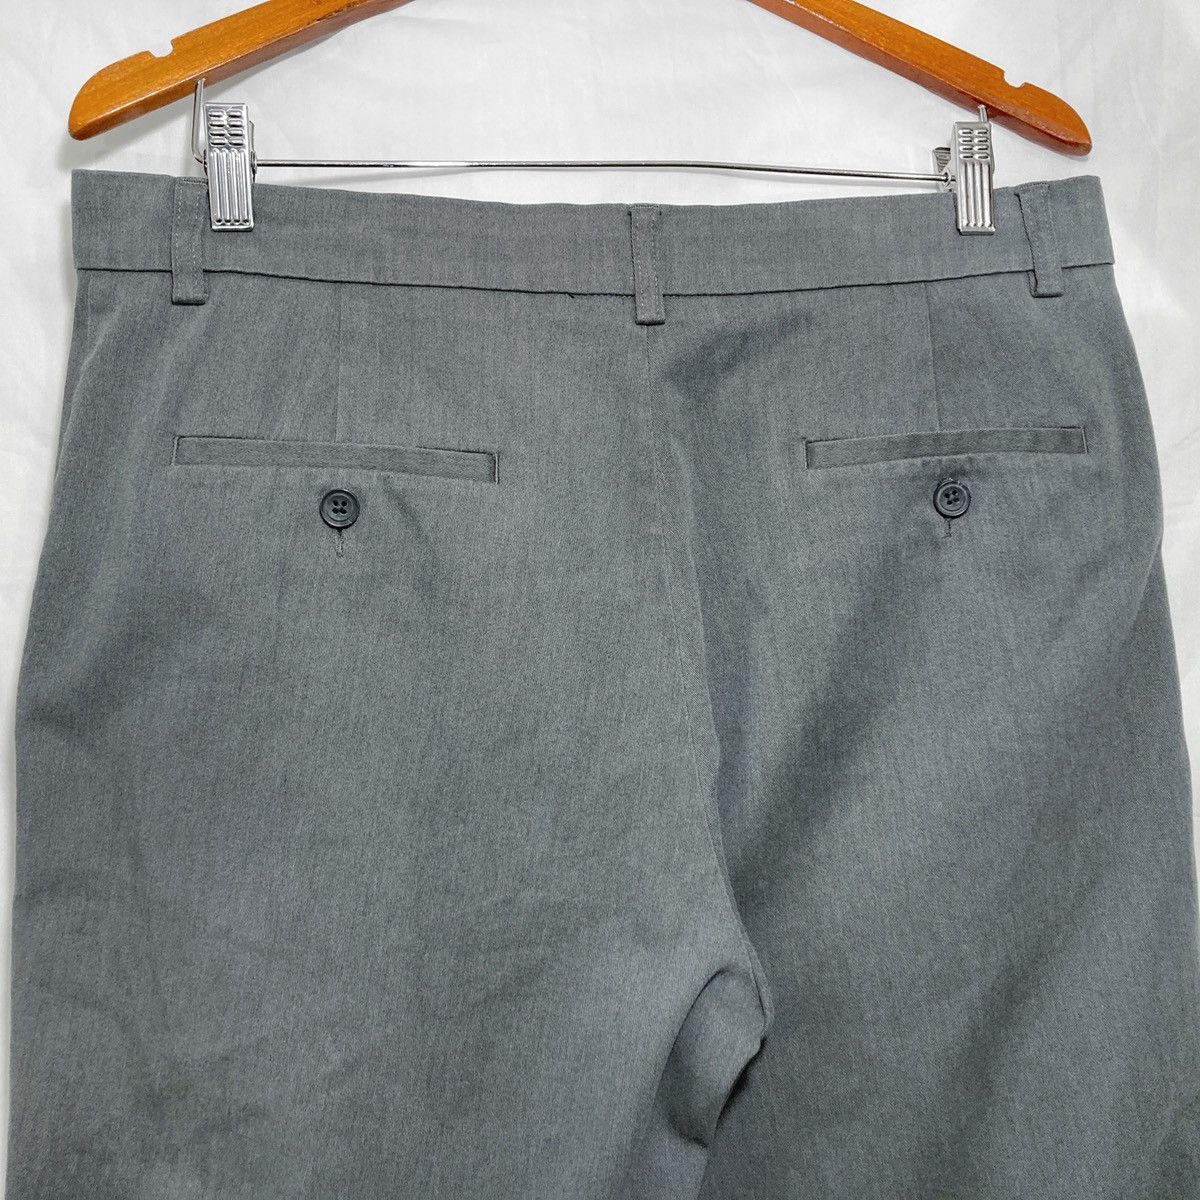 Haggar HAGGAR Men’s Stretch Pants Comfort Expandimatic Classic Fit Size 34R - 3 Thumbnail